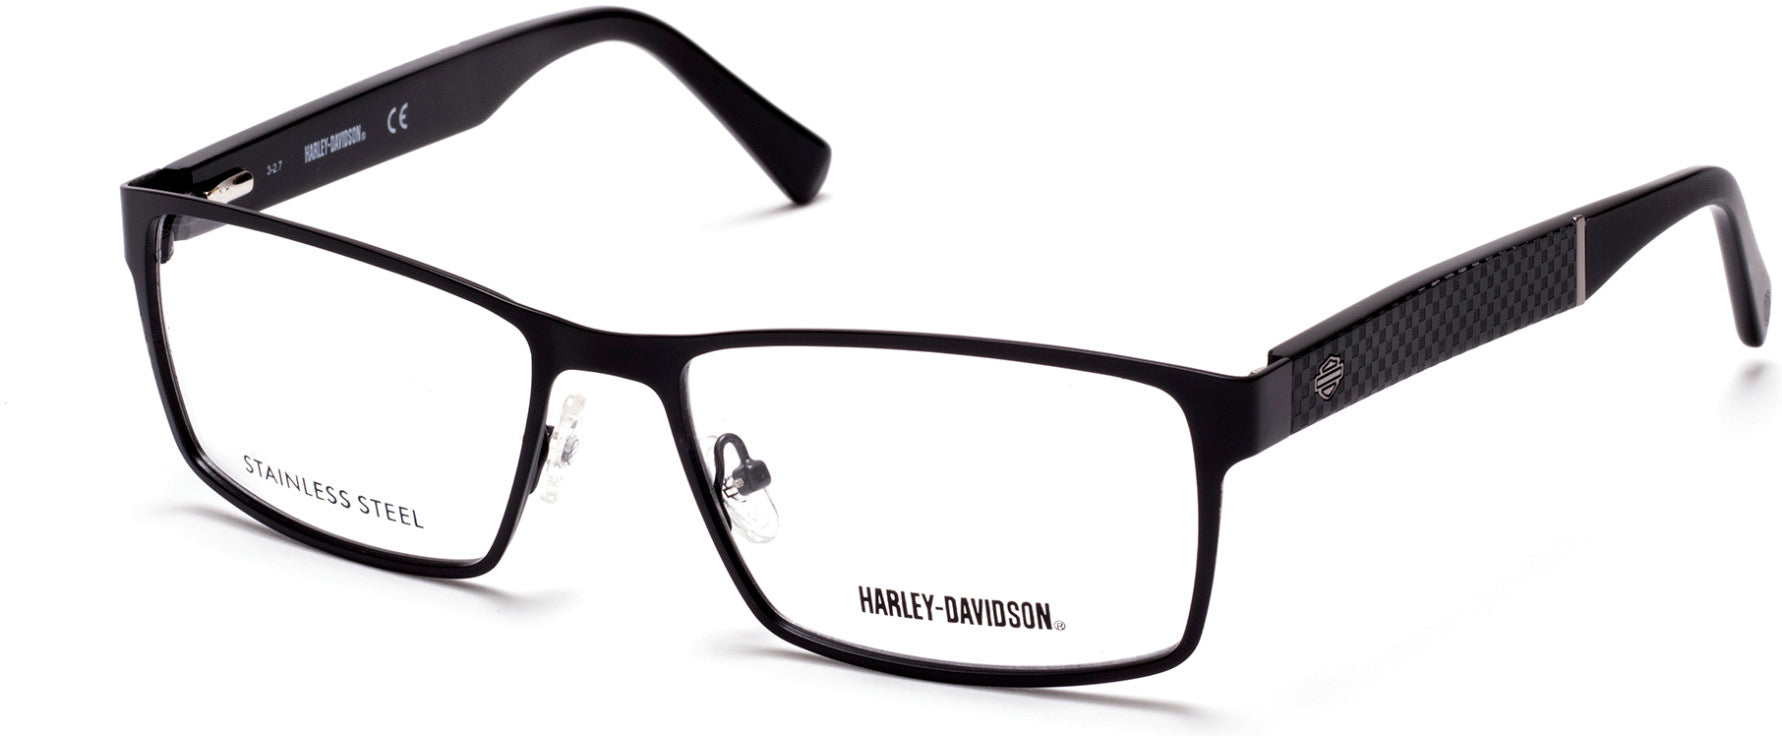 Harley-Davidson HD0775 Geometric Eyeglasses 002-002 - Matte Black